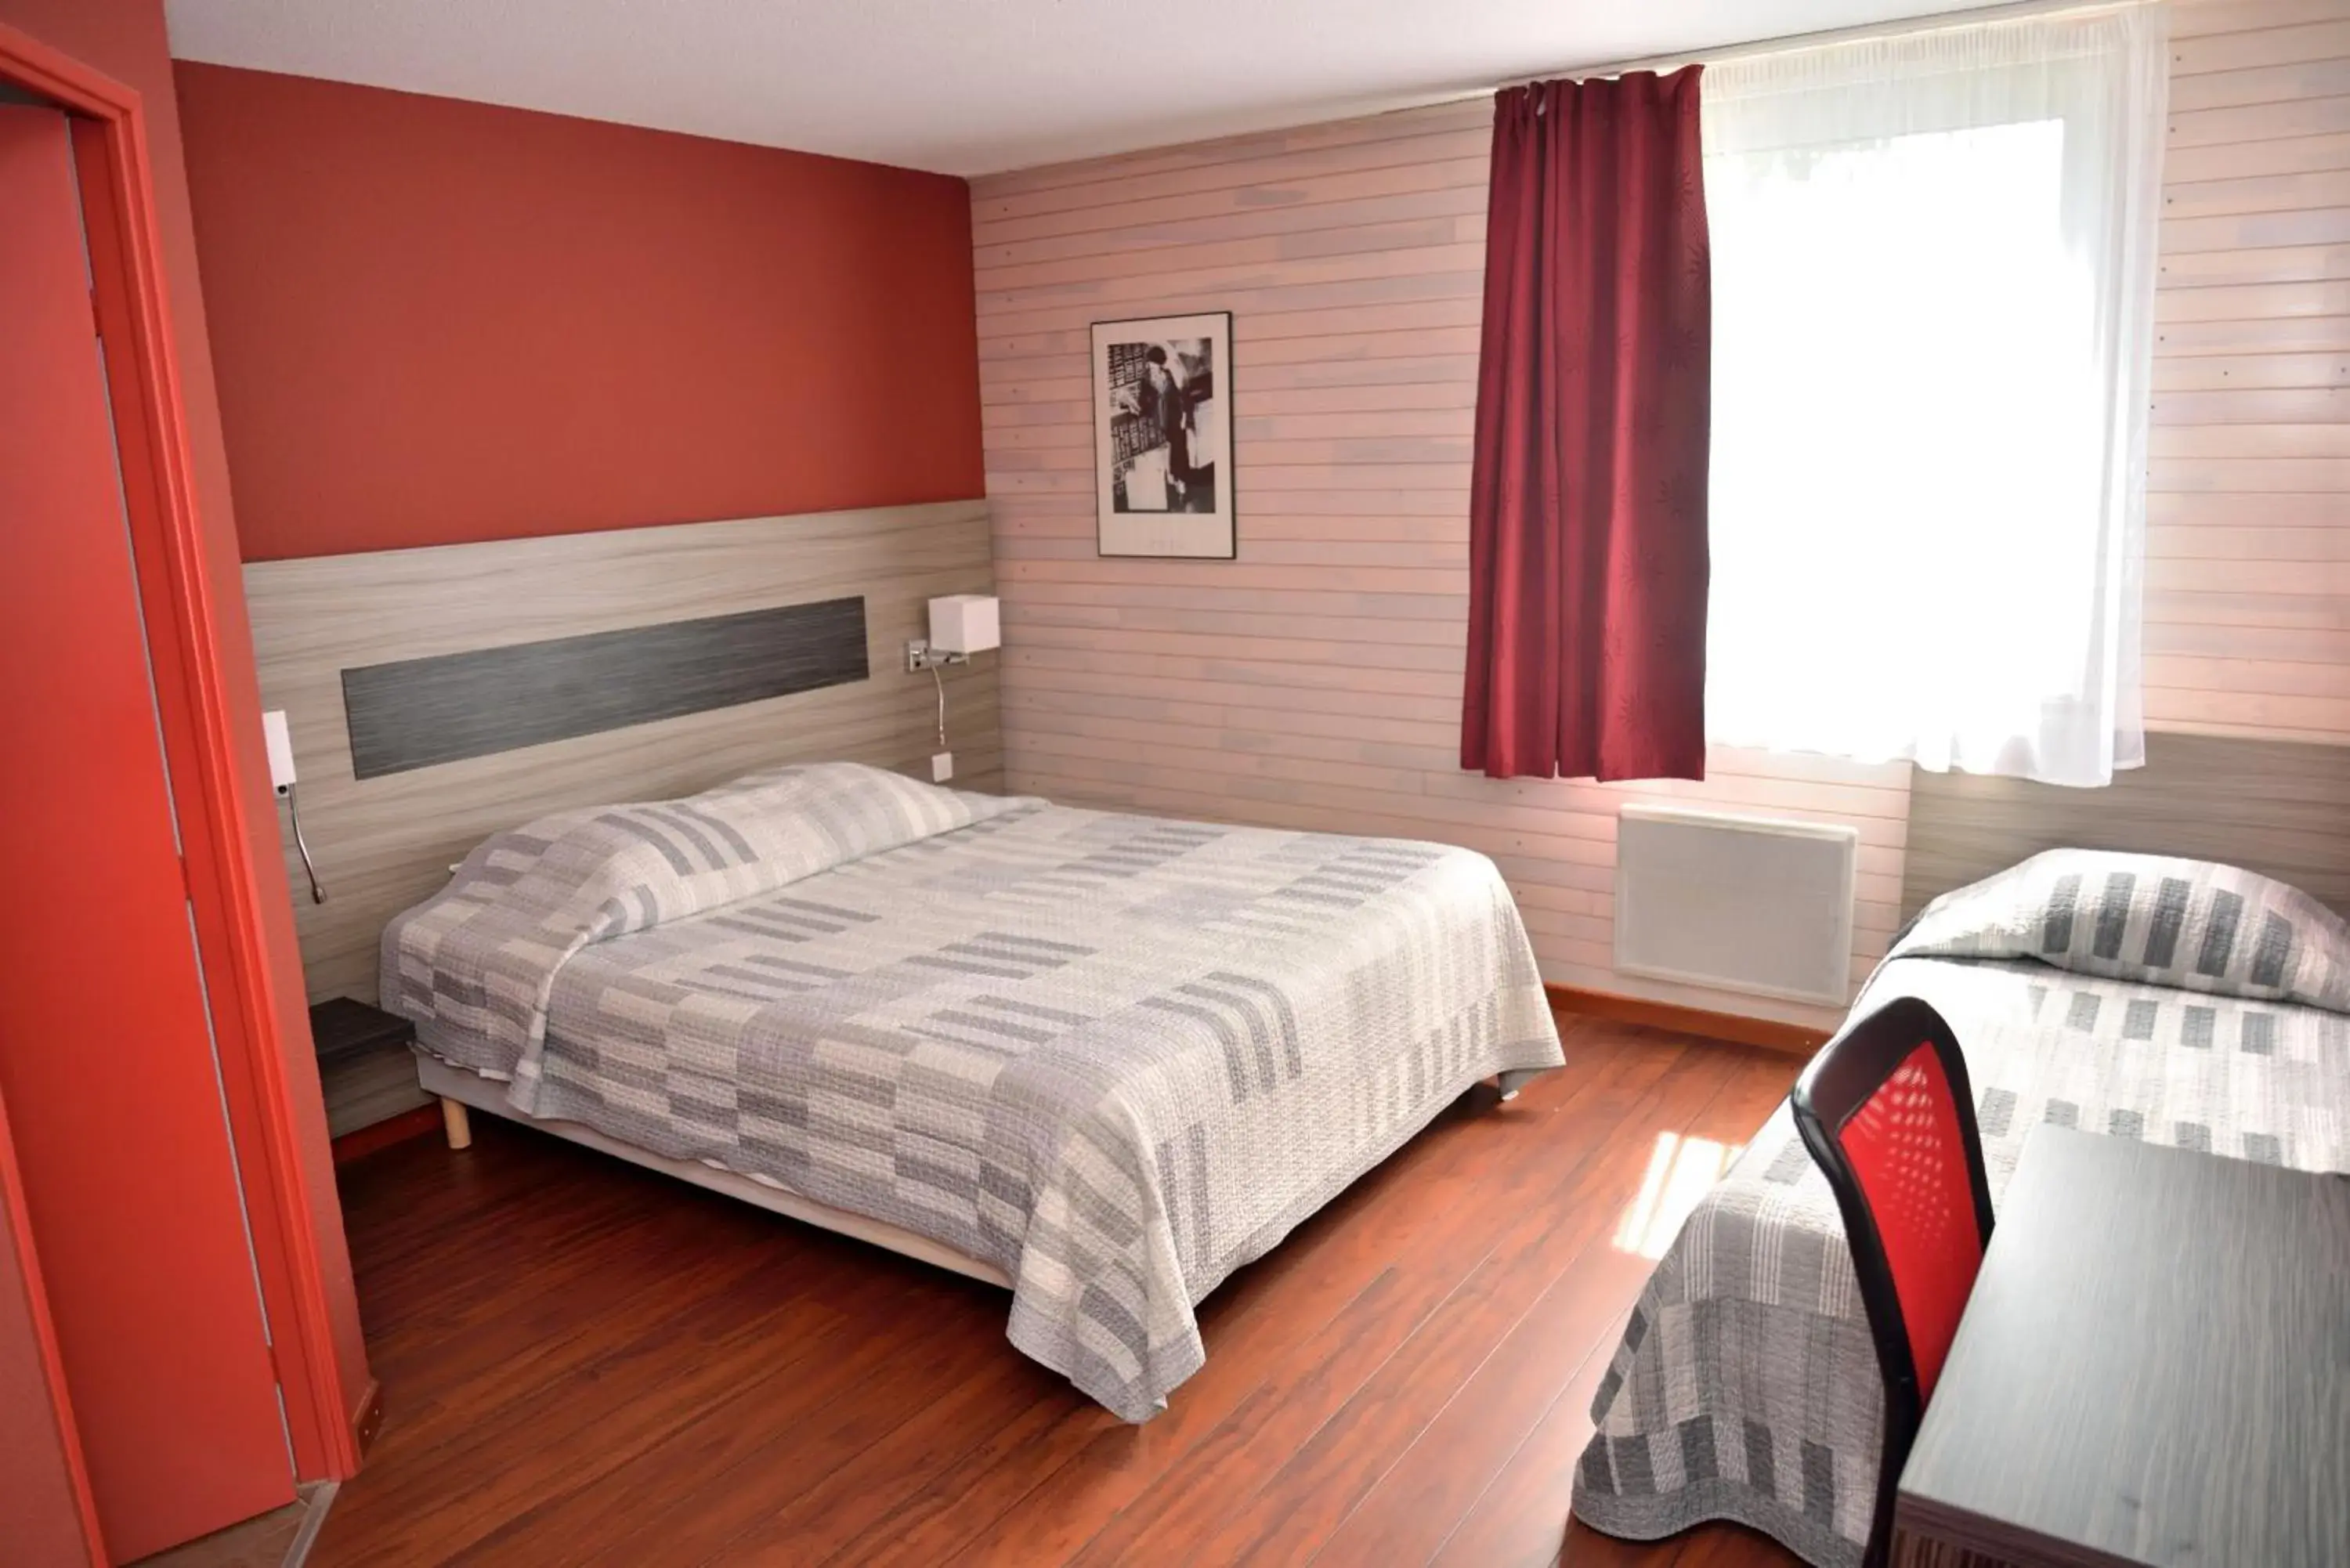 Bed, Room Photo in Hotel Argos